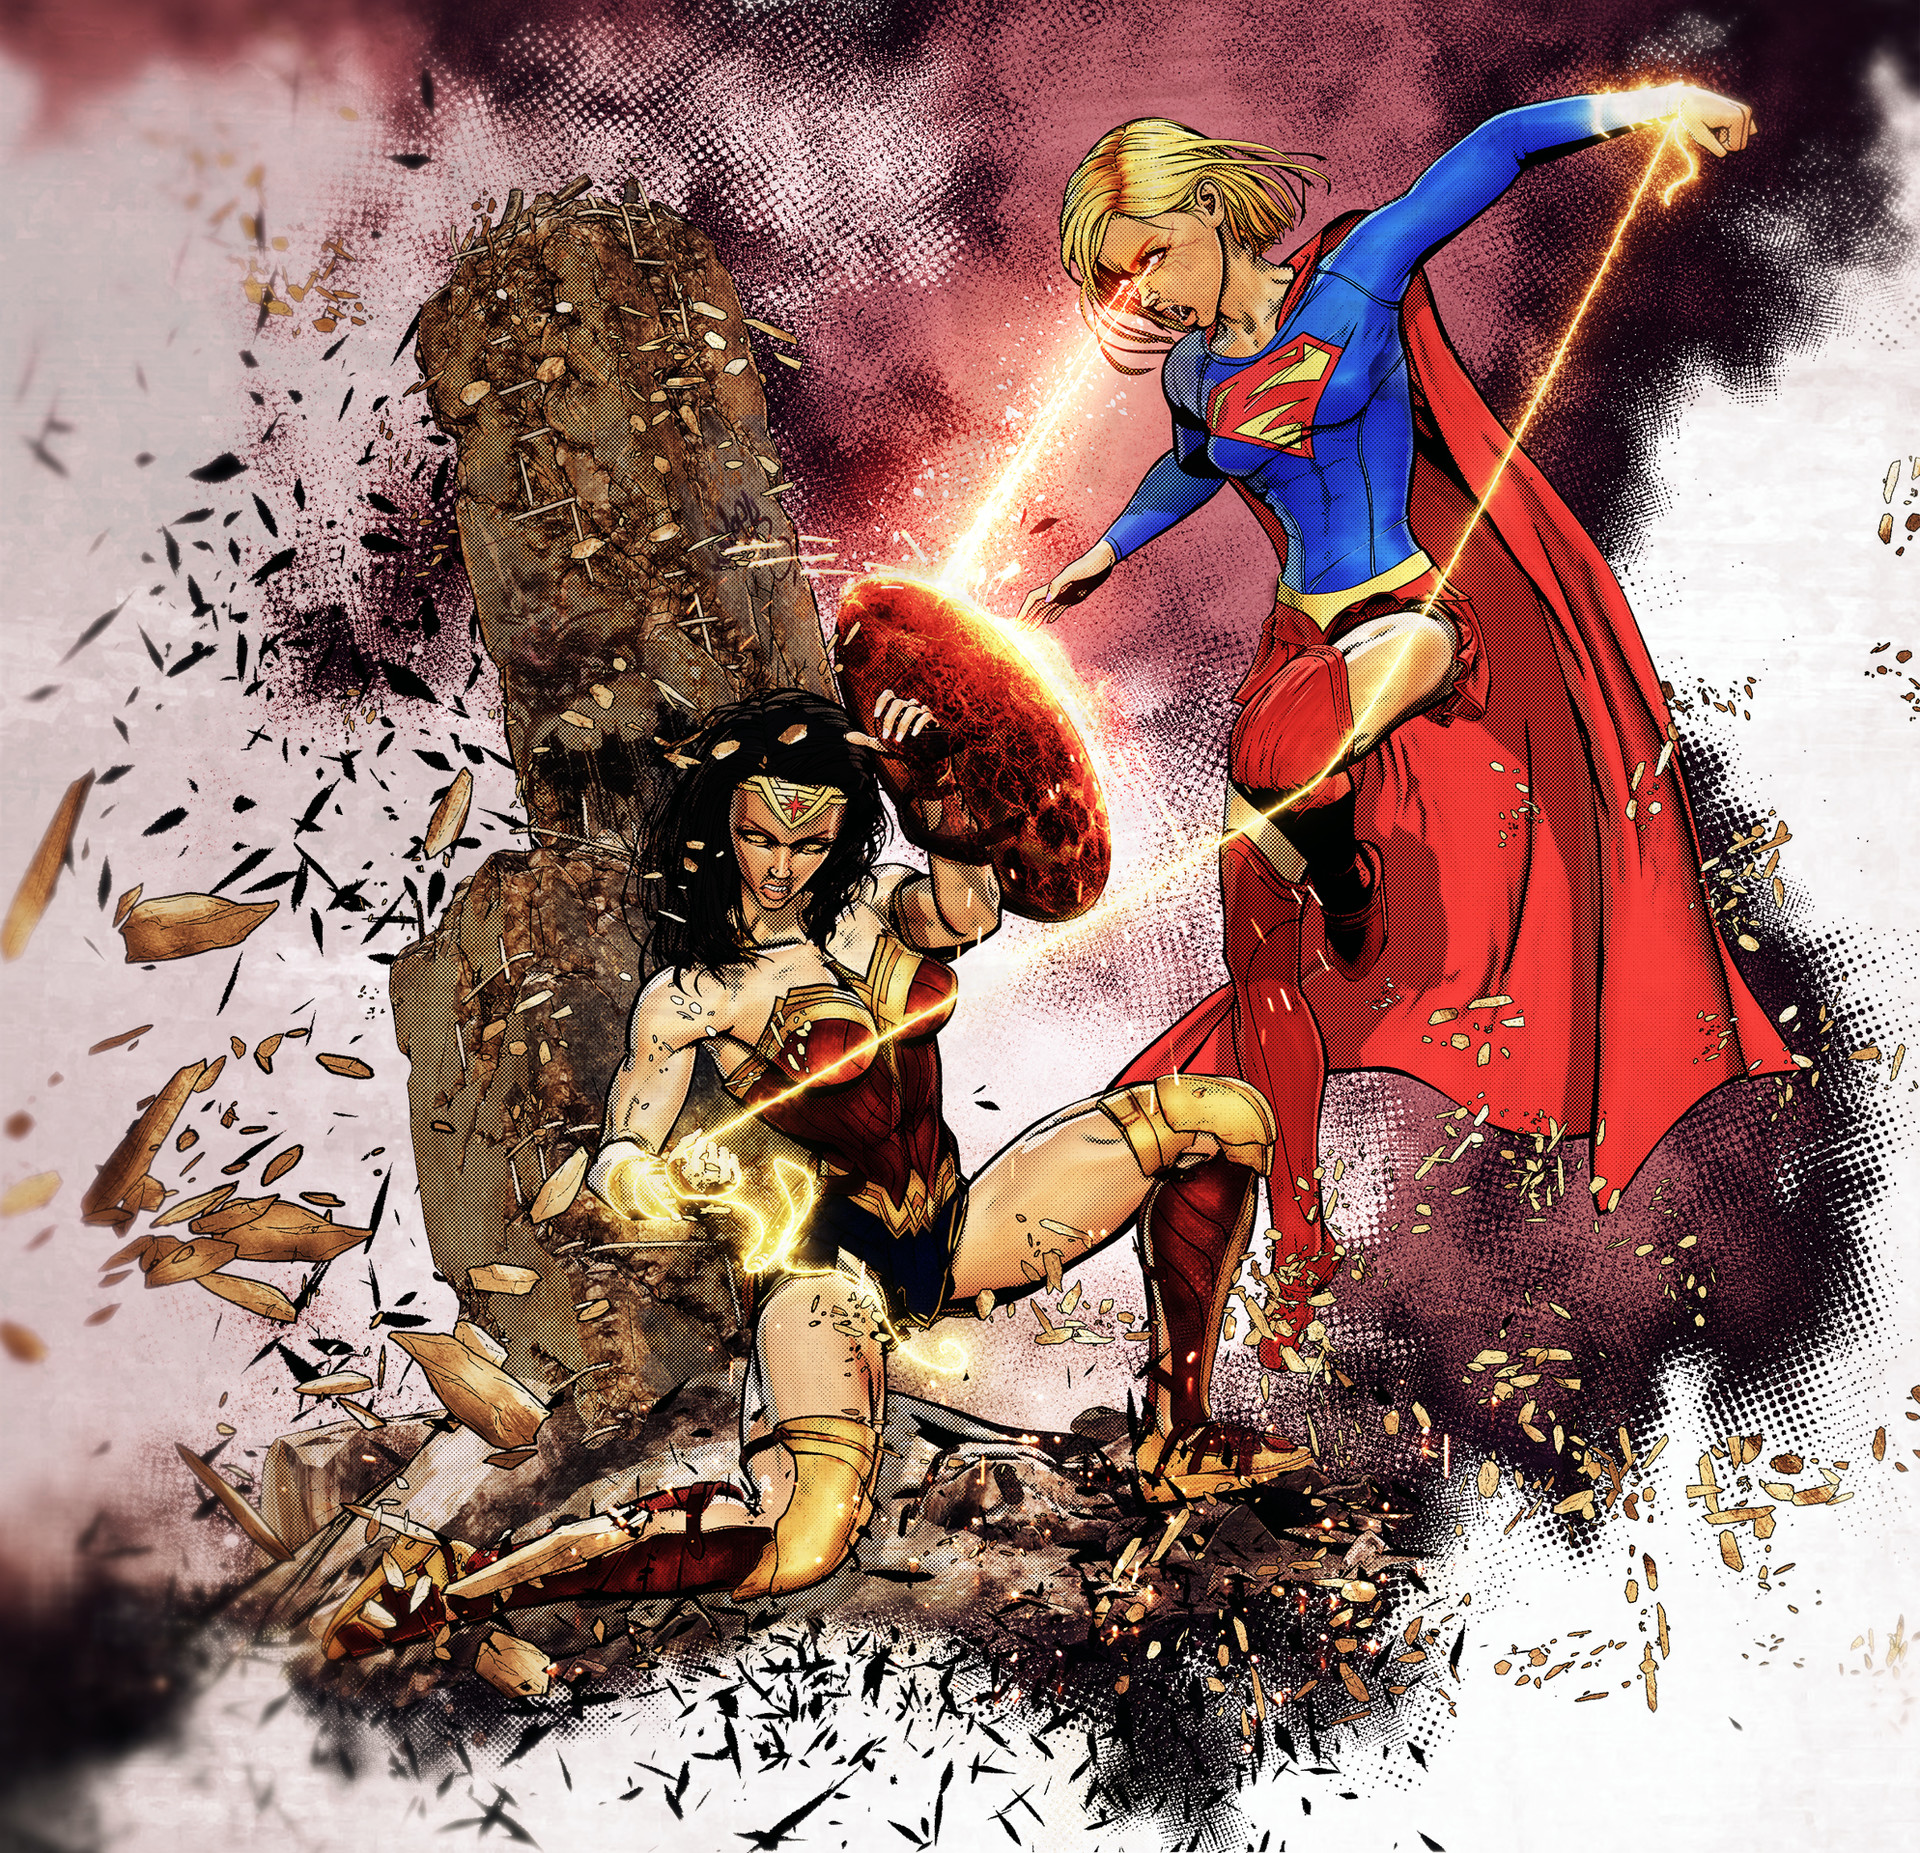 Supergirl vs Wonder Woman.